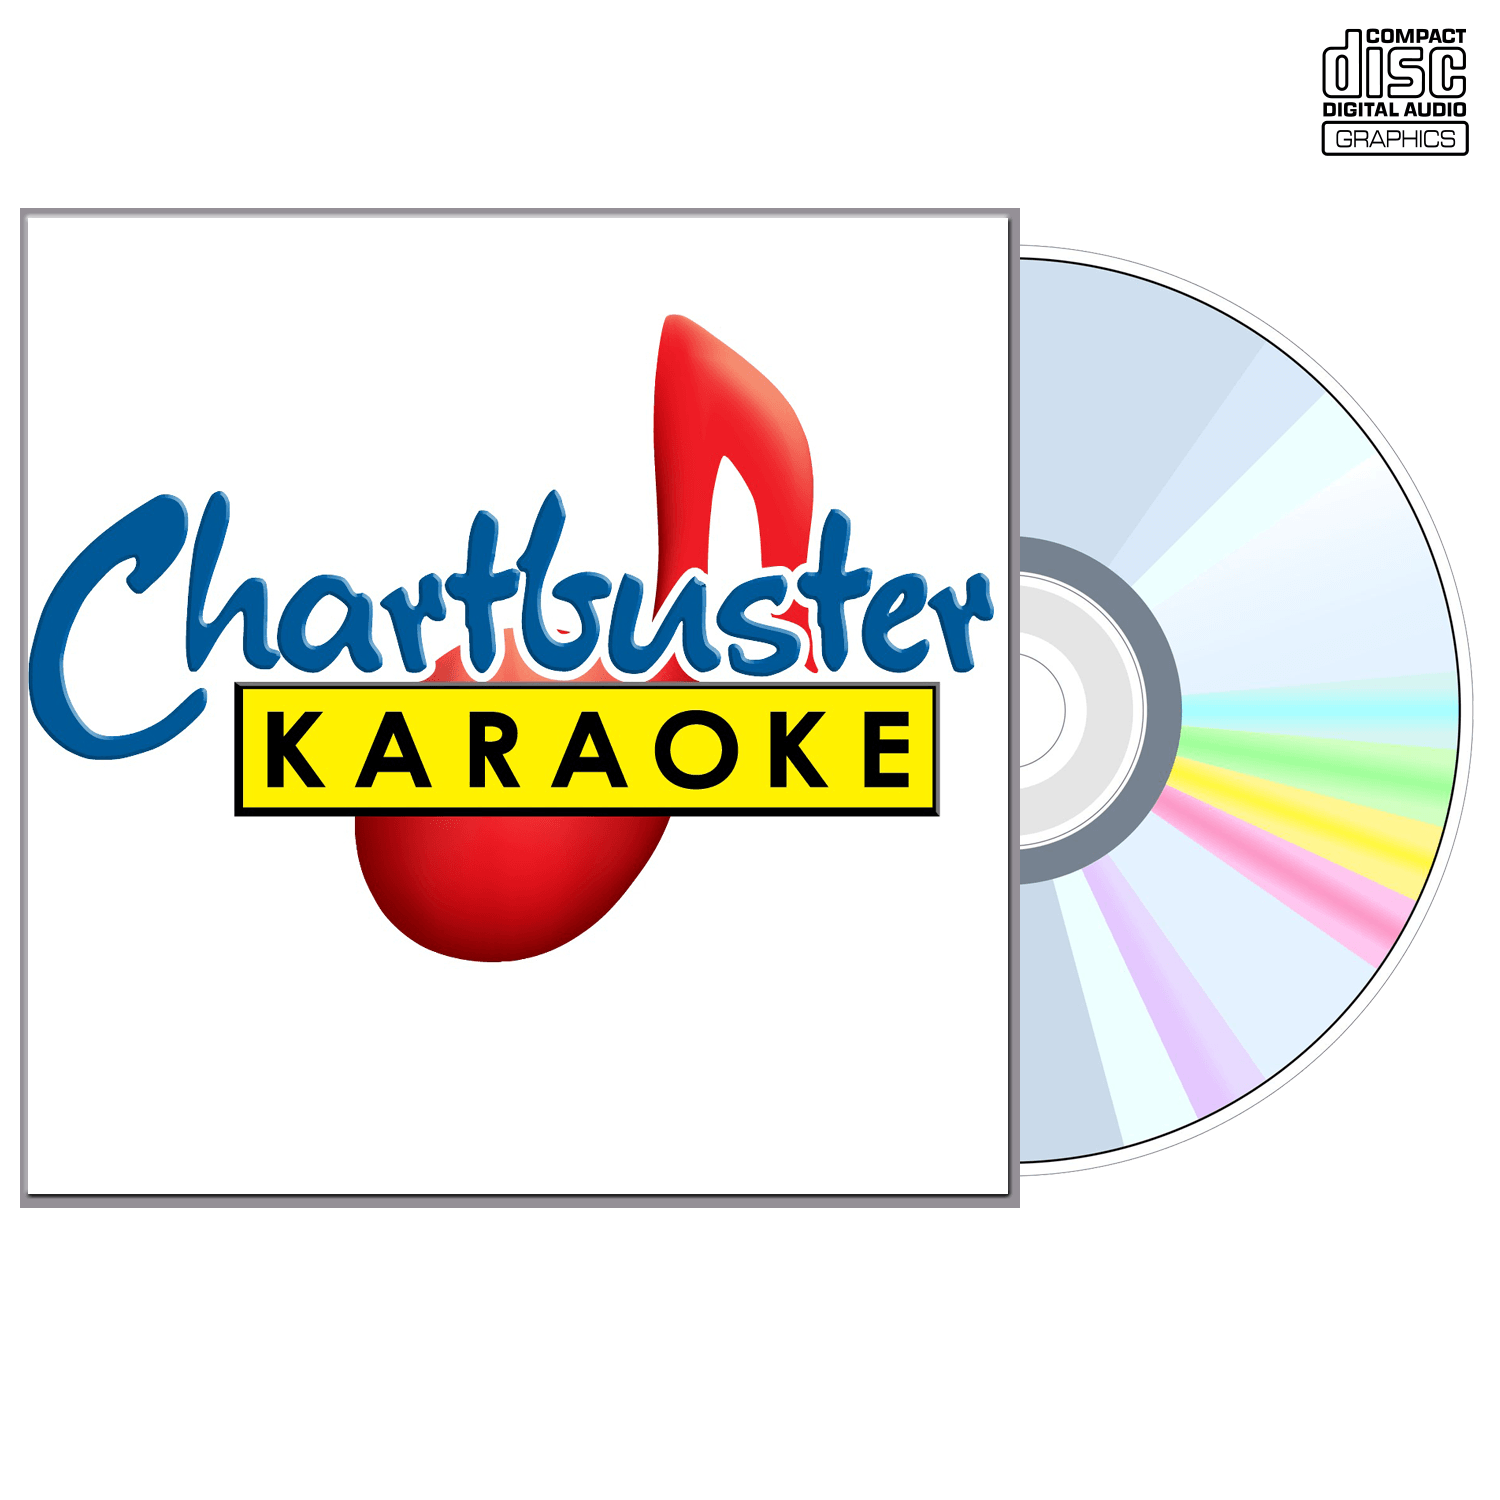 Tim Mcgraw Vol 1 - CD+G - Chartbuster Karaoke - Karaoke Home Entertainment